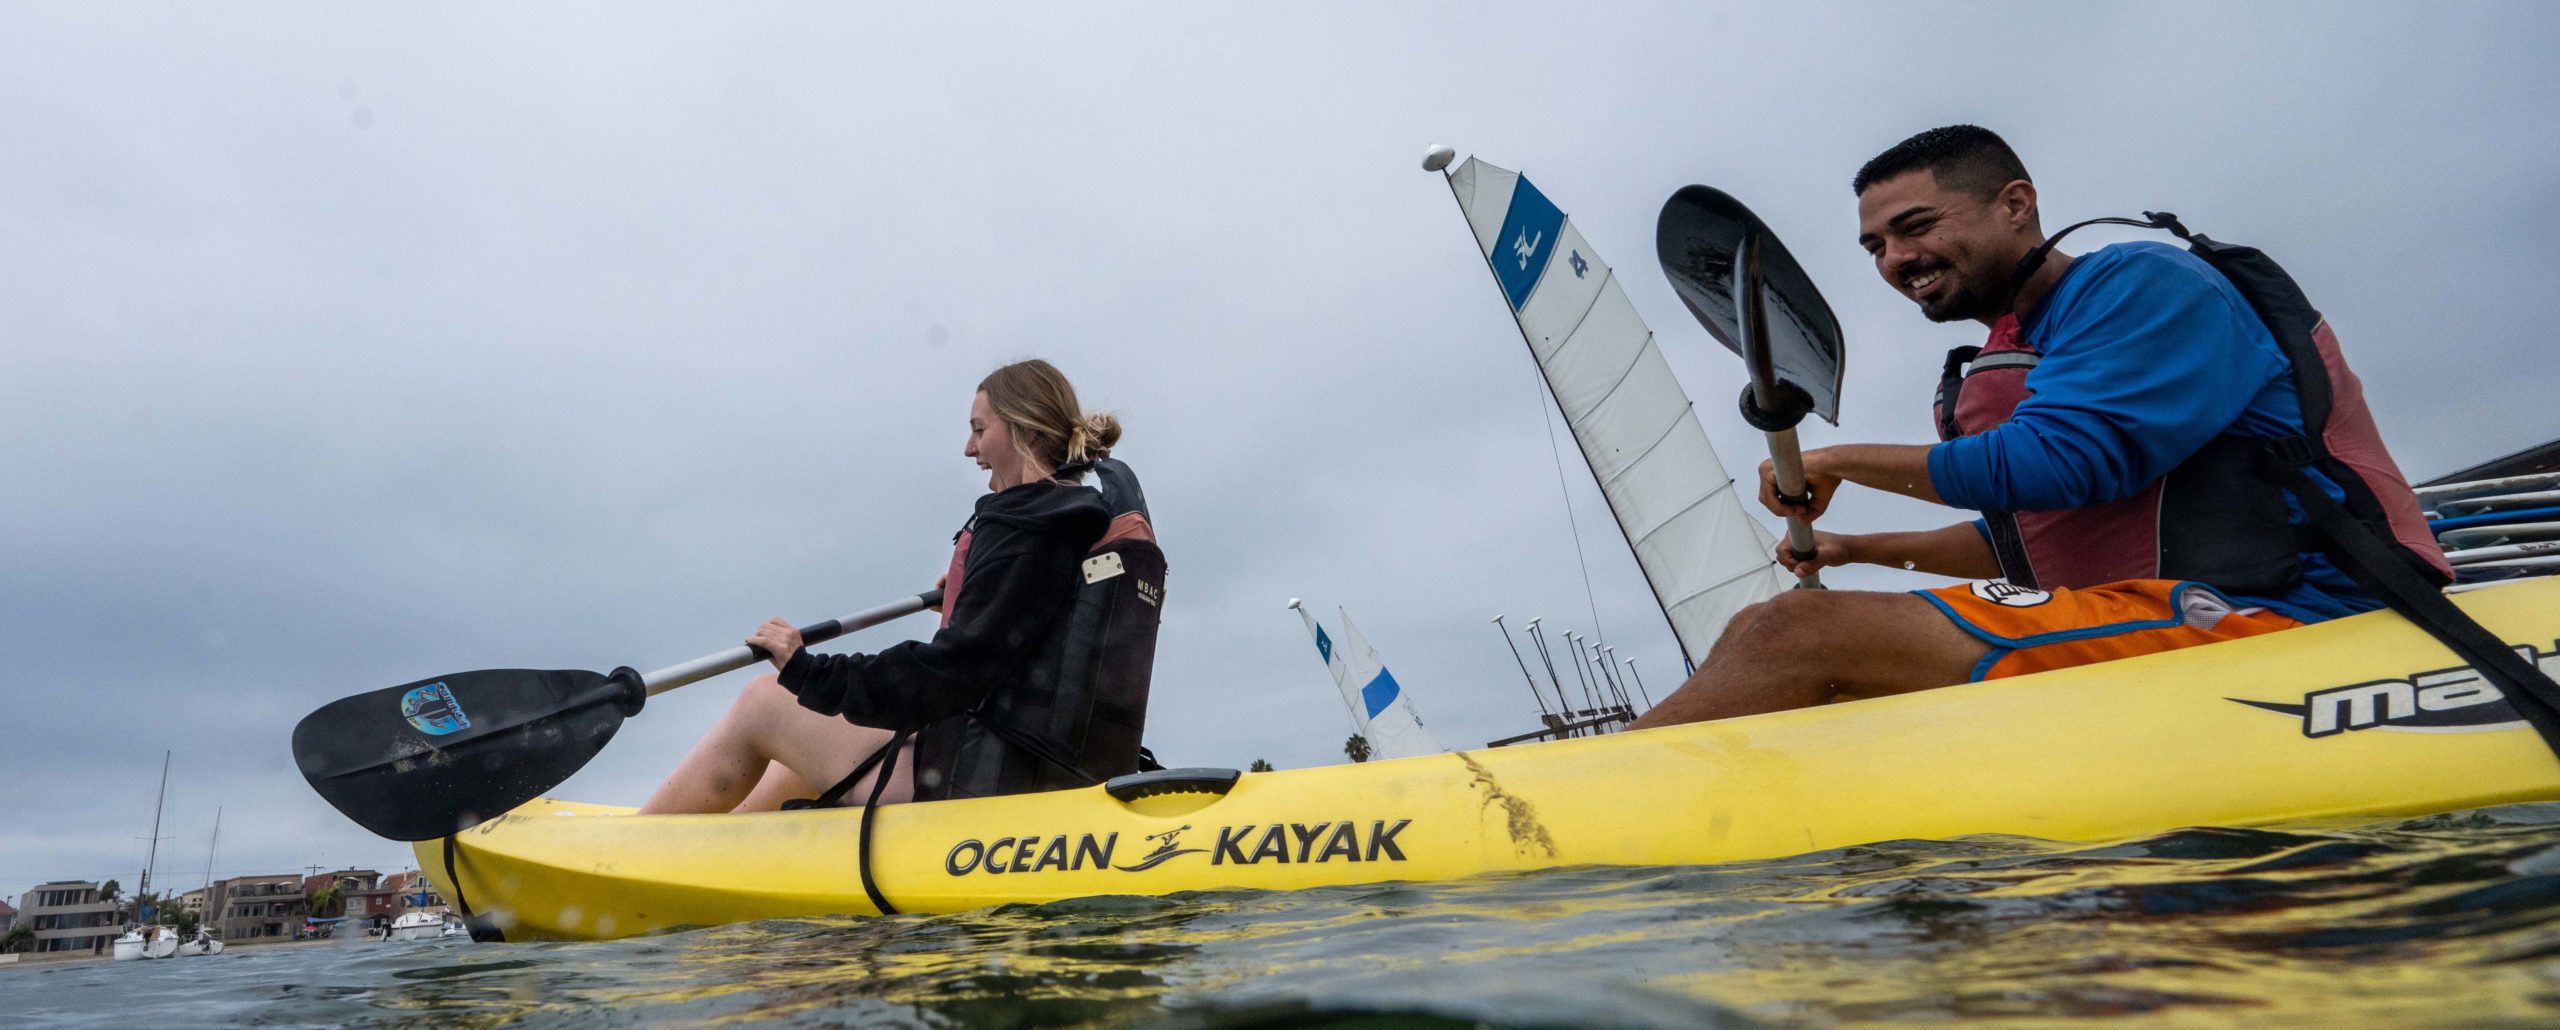 Adaptive Equipment for Kayaking